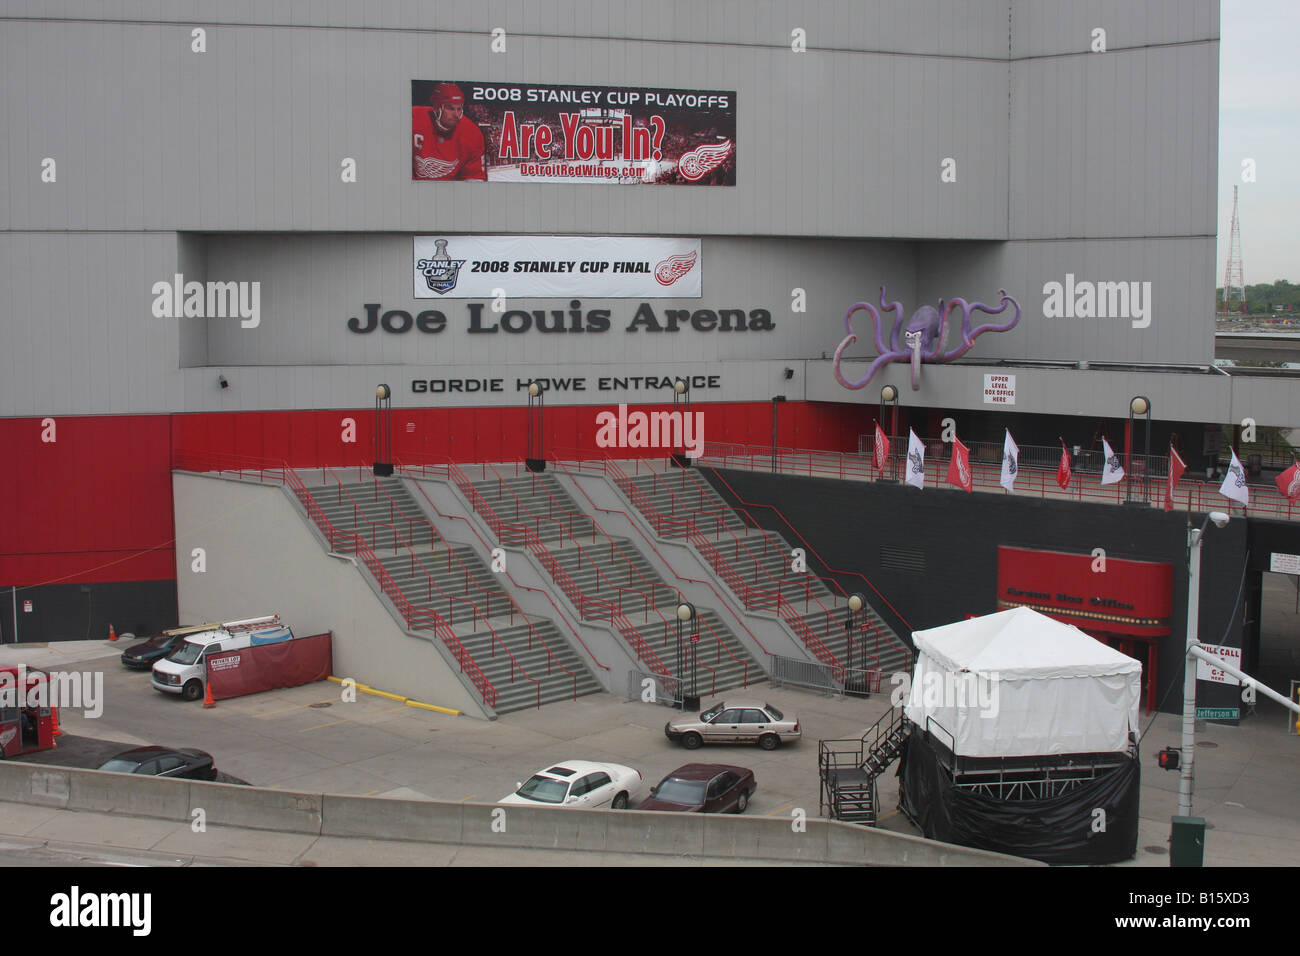 Photo Essay: The Last Days of Joe Louis Arena